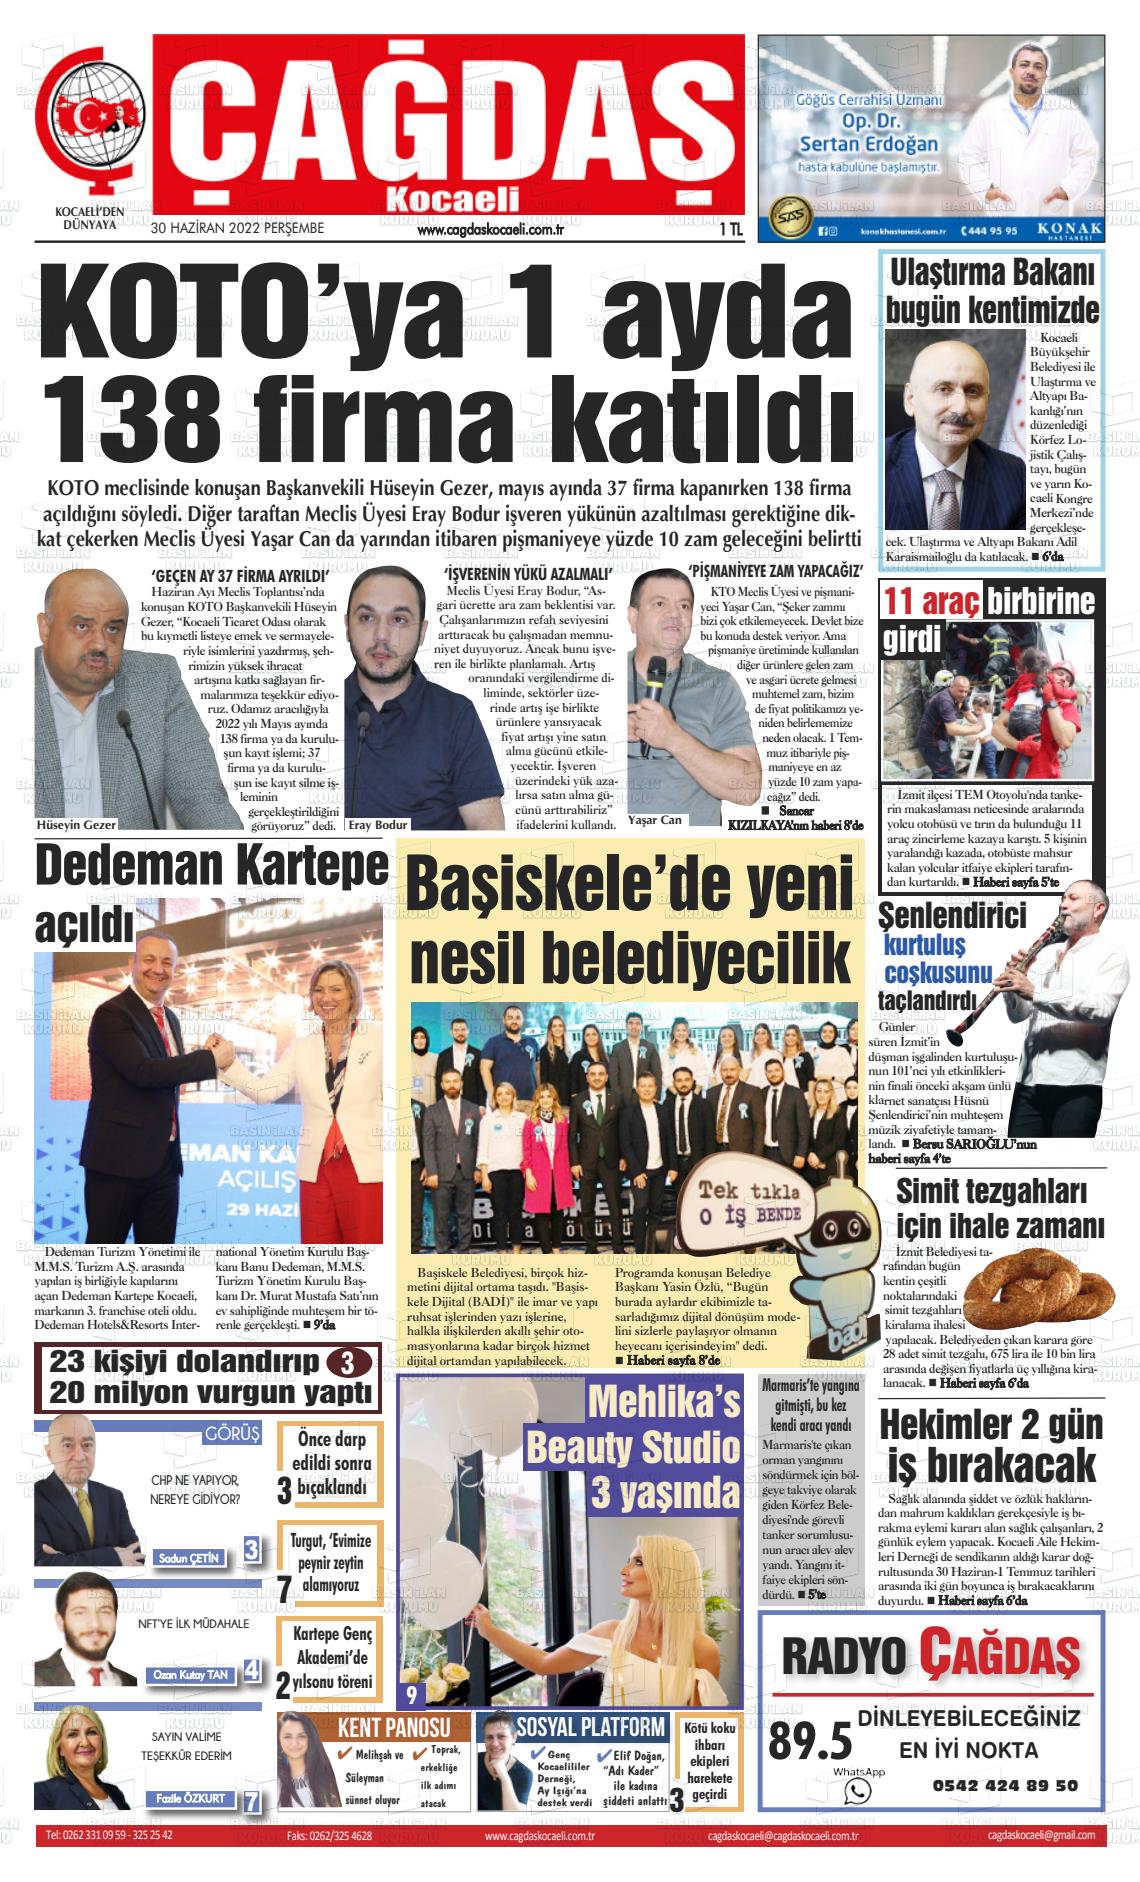 30 Haziran 2022 Çağdaş Kocaeli Gazete Manşeti